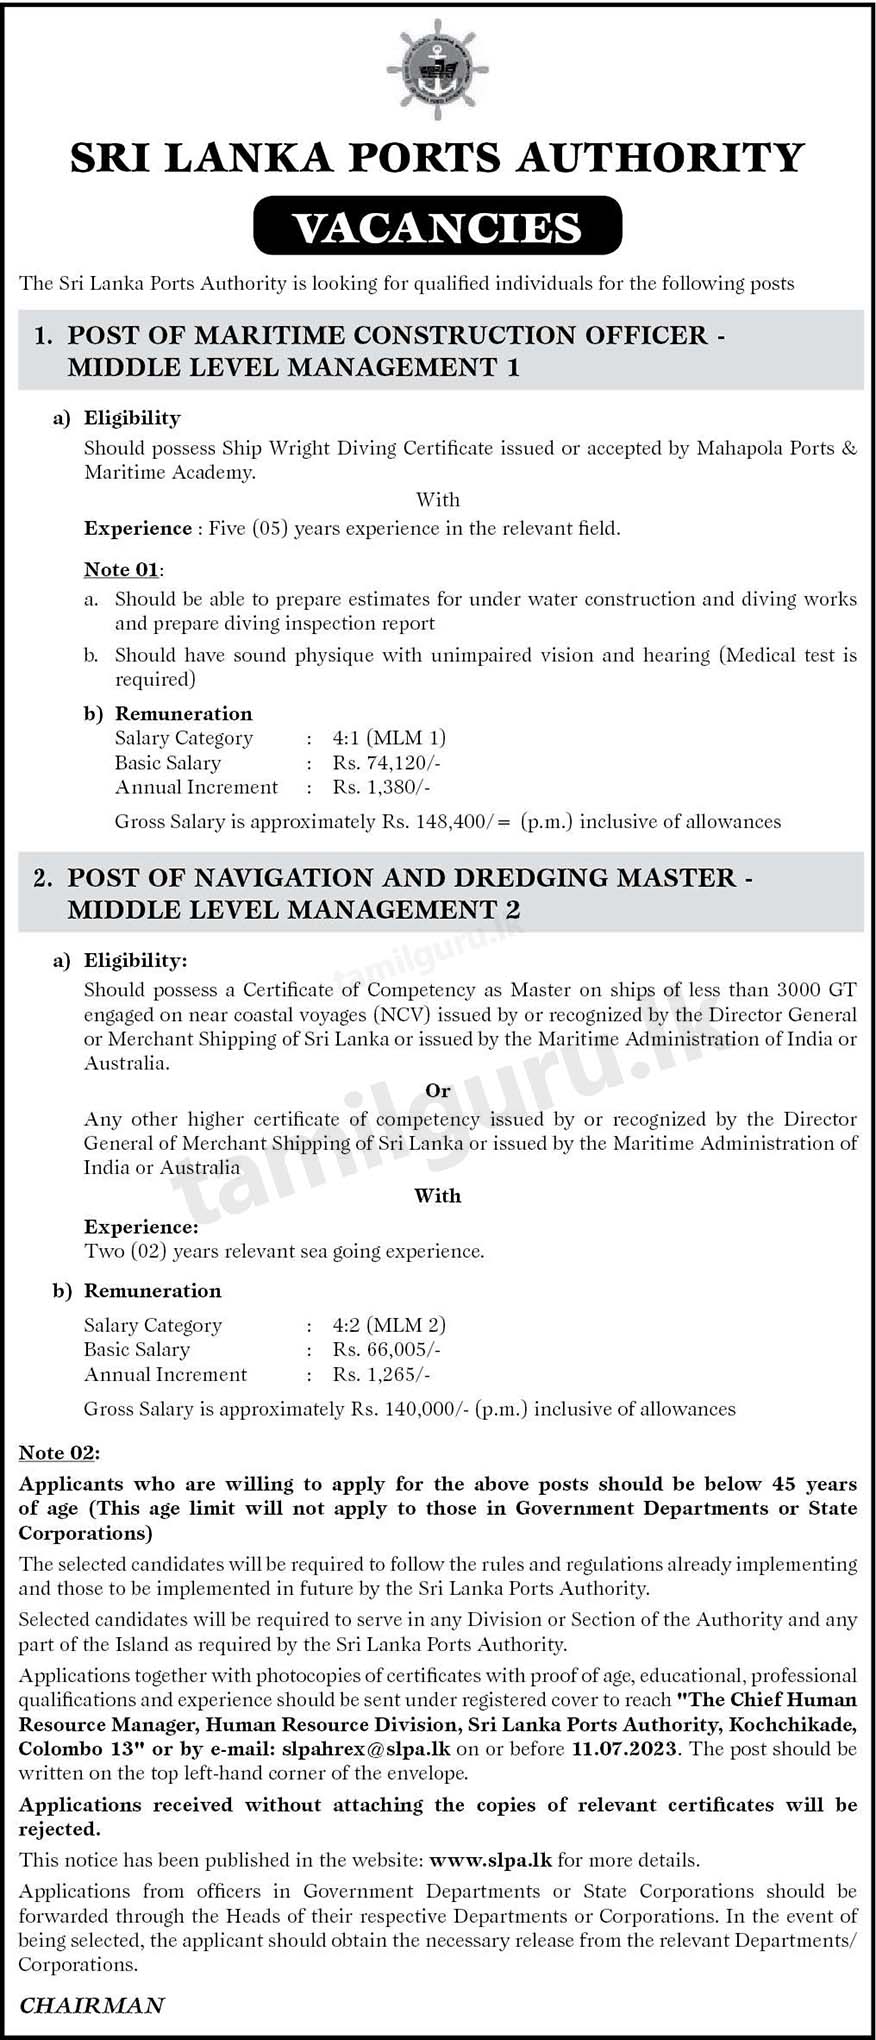 Job Vacancies 2023 June - Sri Lanka Ports Authority (SLPA) : Maritime Construction Officer, Navigation and Dredging Master